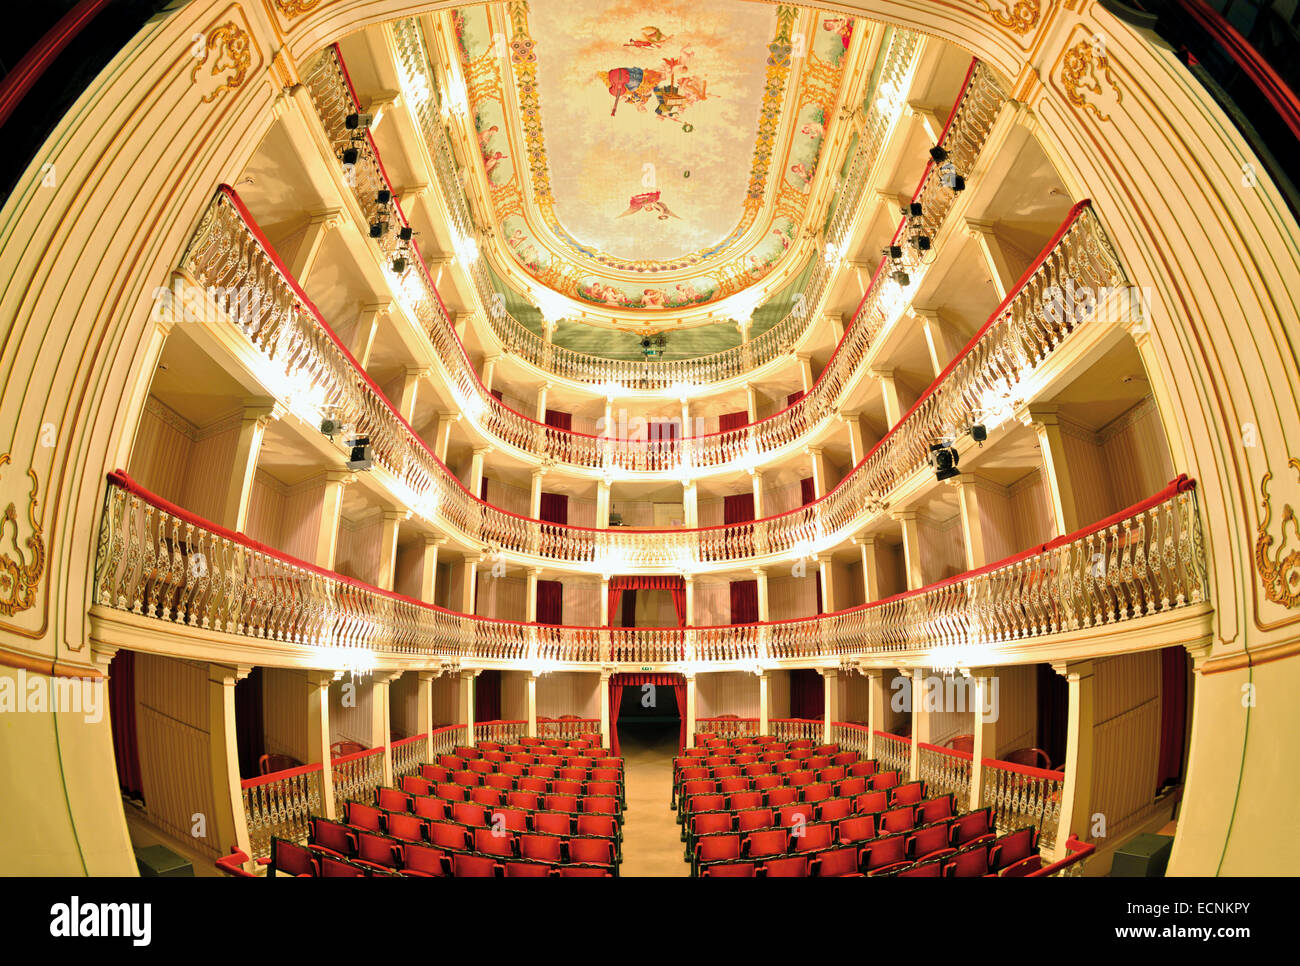 Portugal, Algarve: Auditorium des historischen Theaters Teatro Lethes in Faro Stockfoto